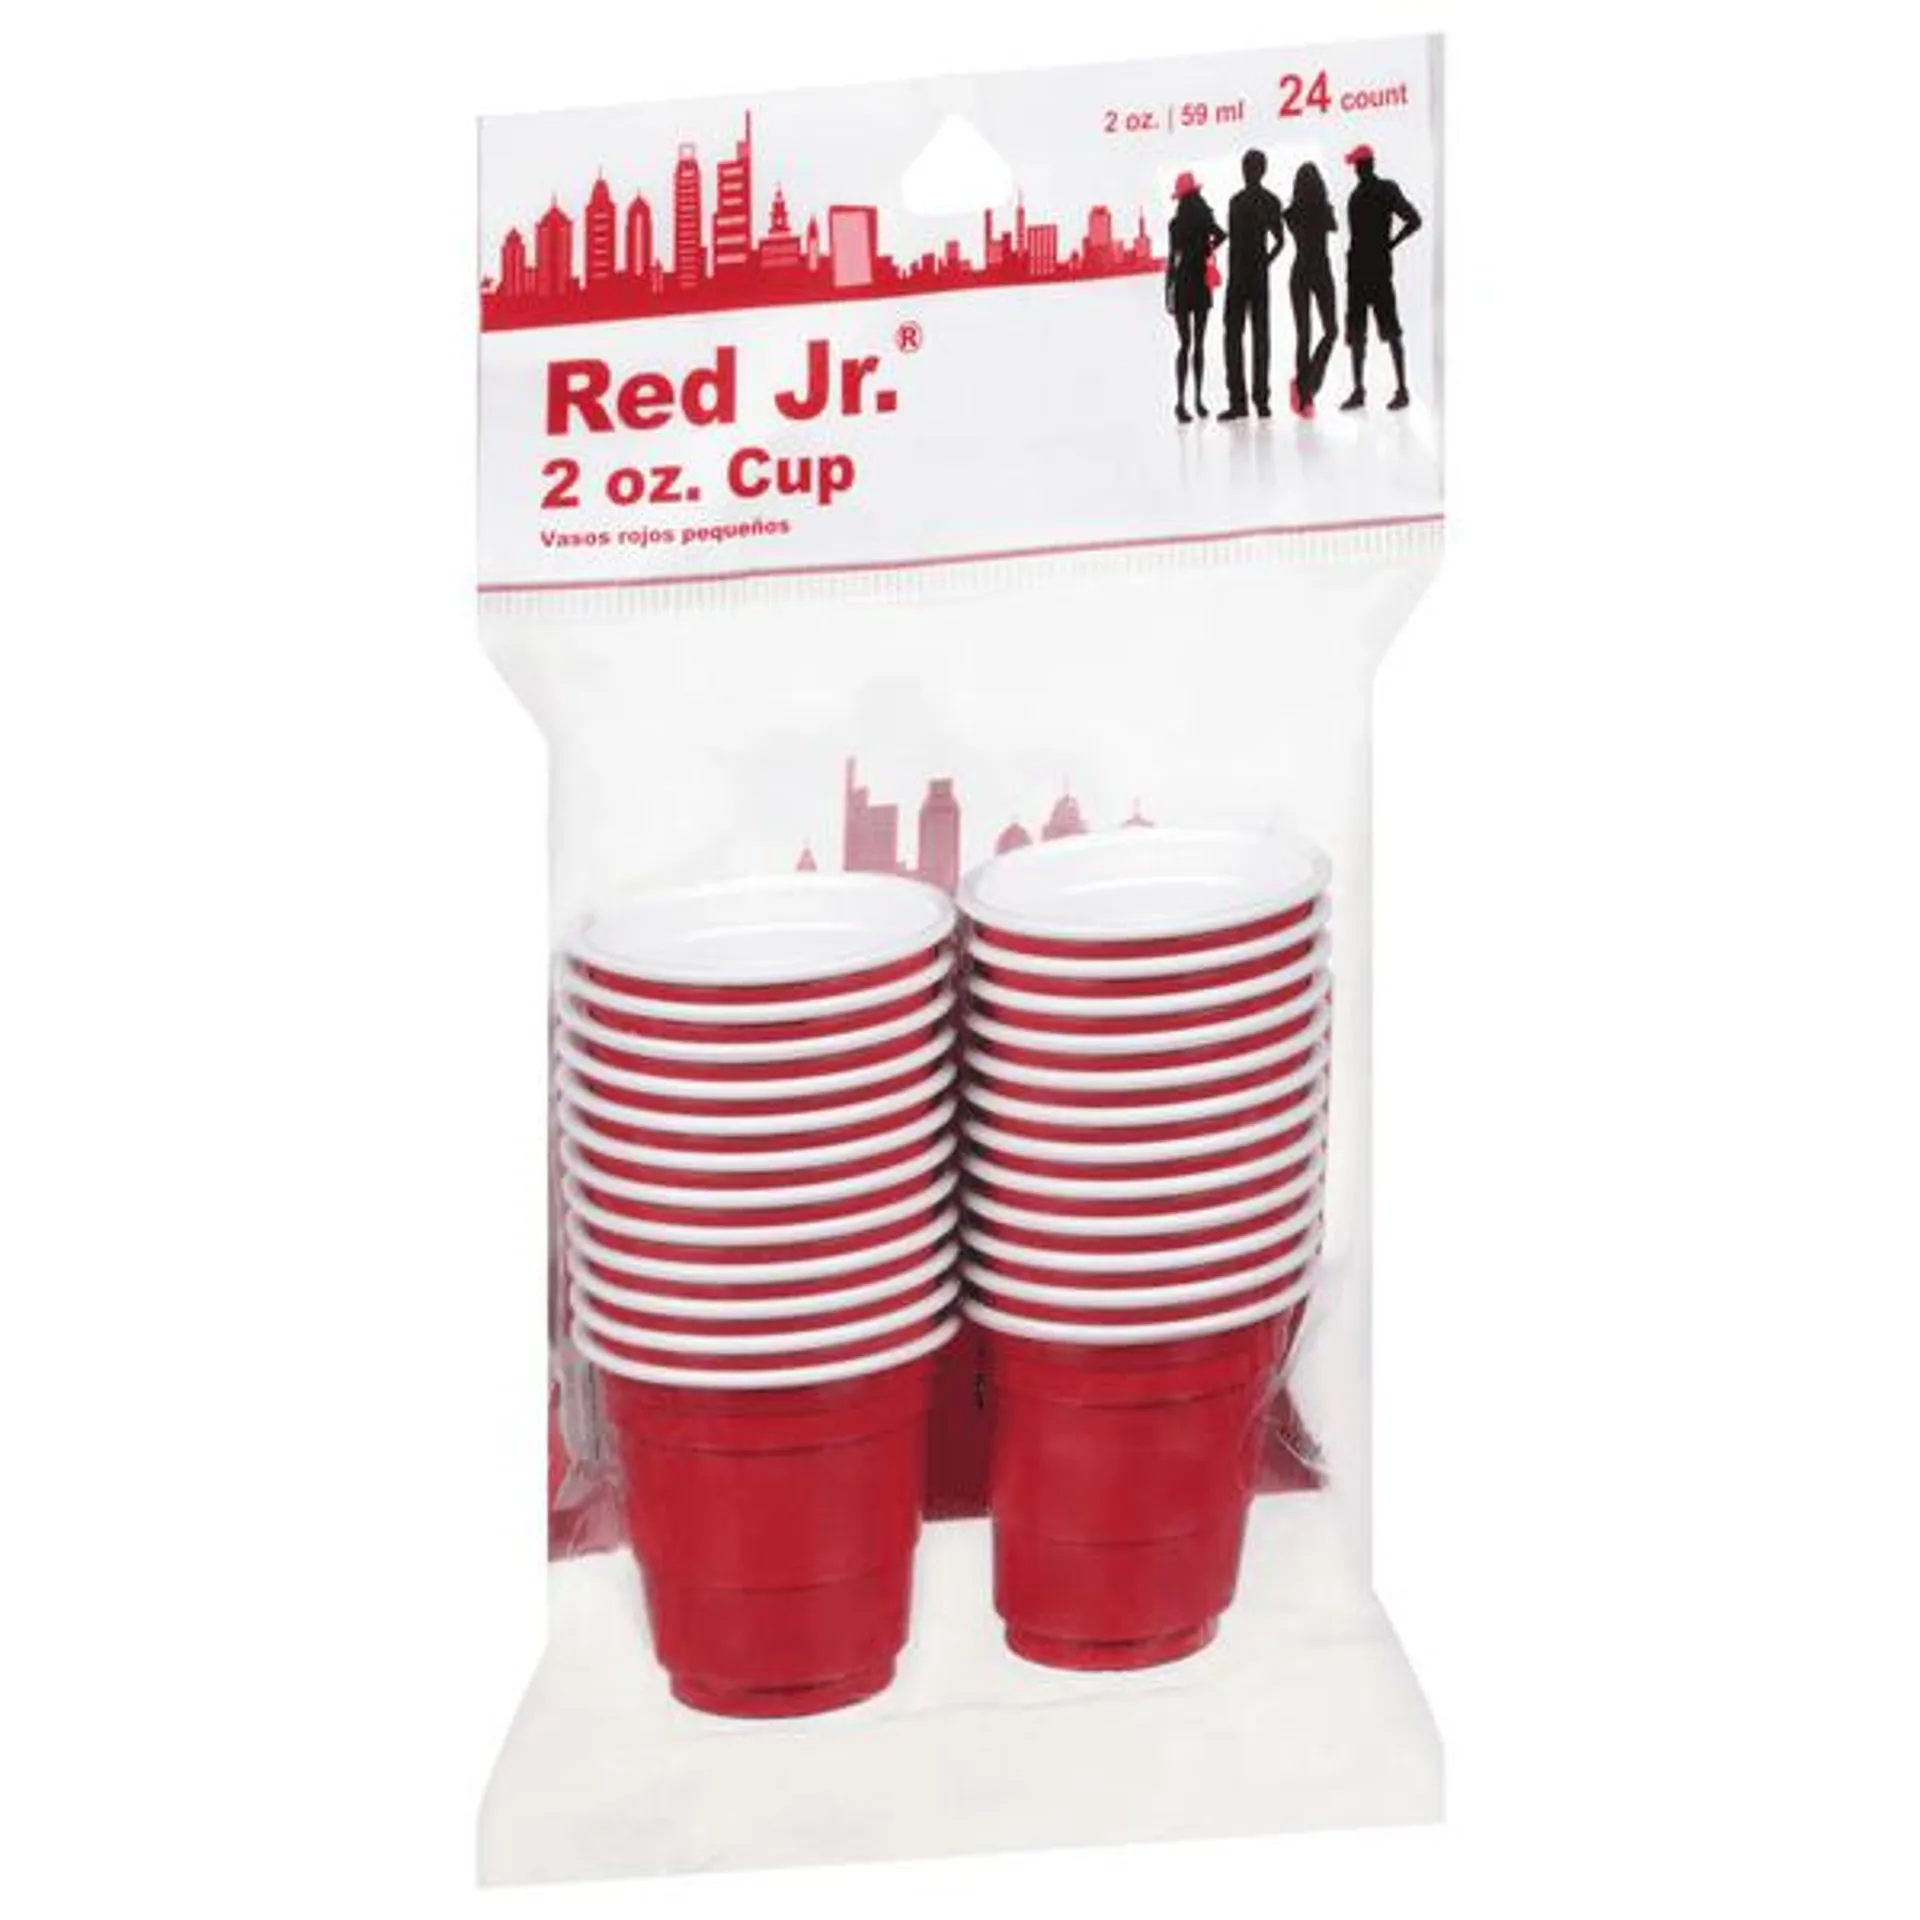 Red Jr. 2 oz. Cup